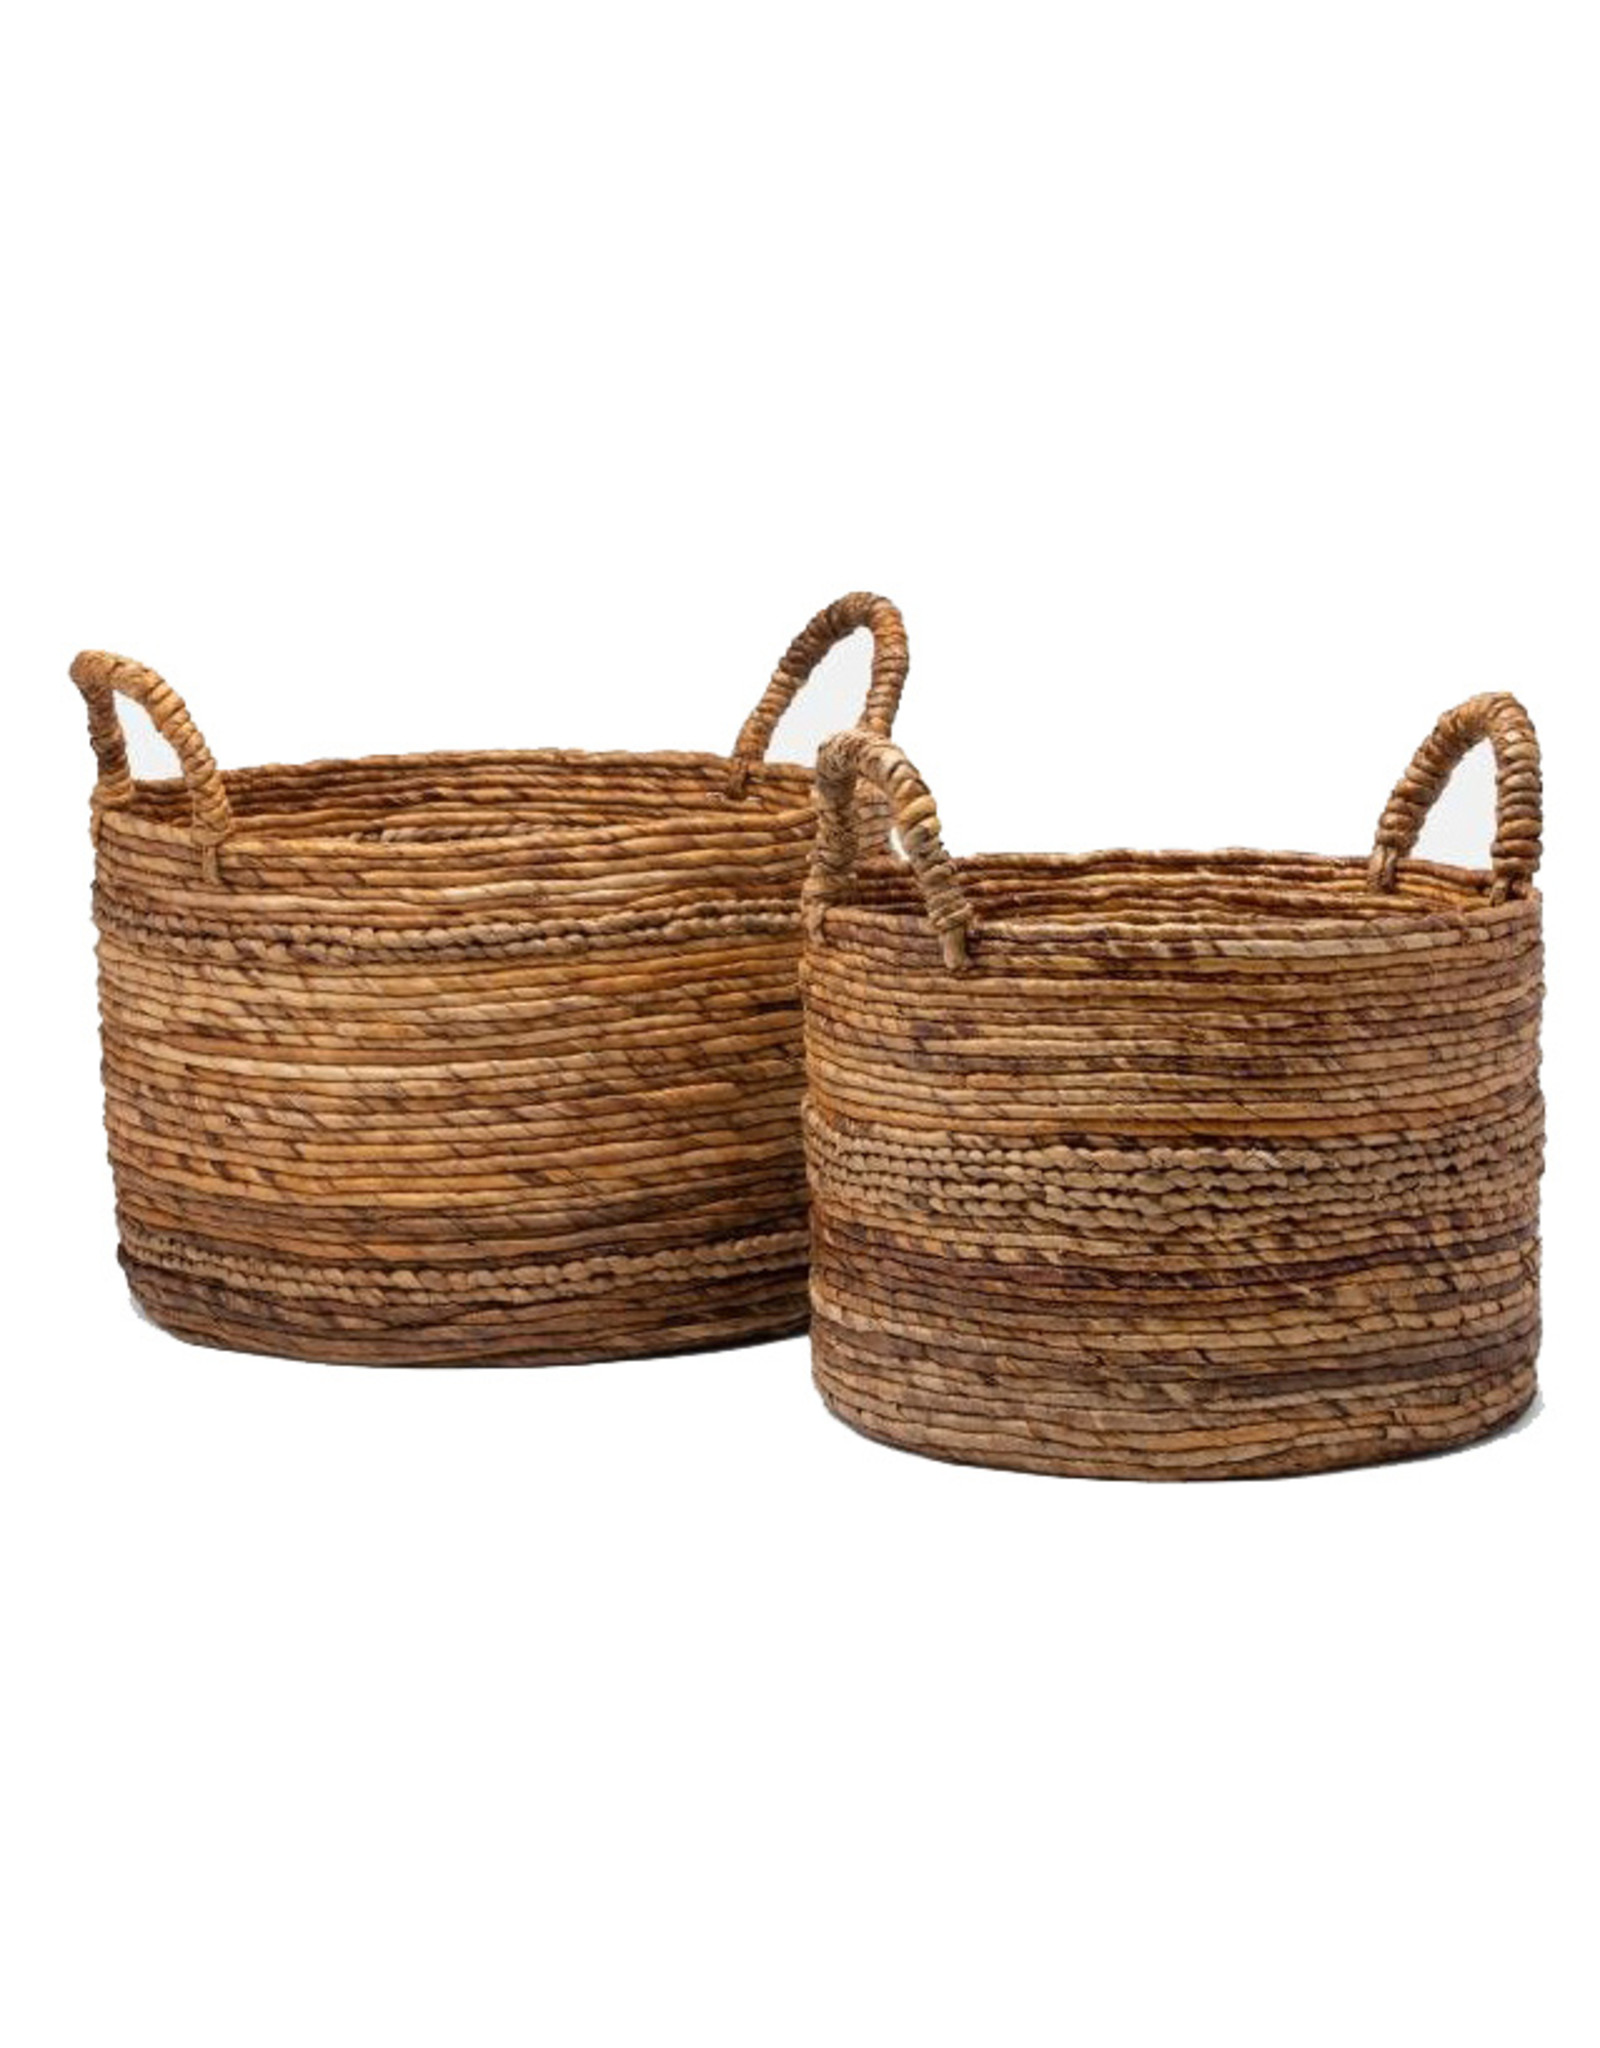 Natural Round Nested Basket, Lg